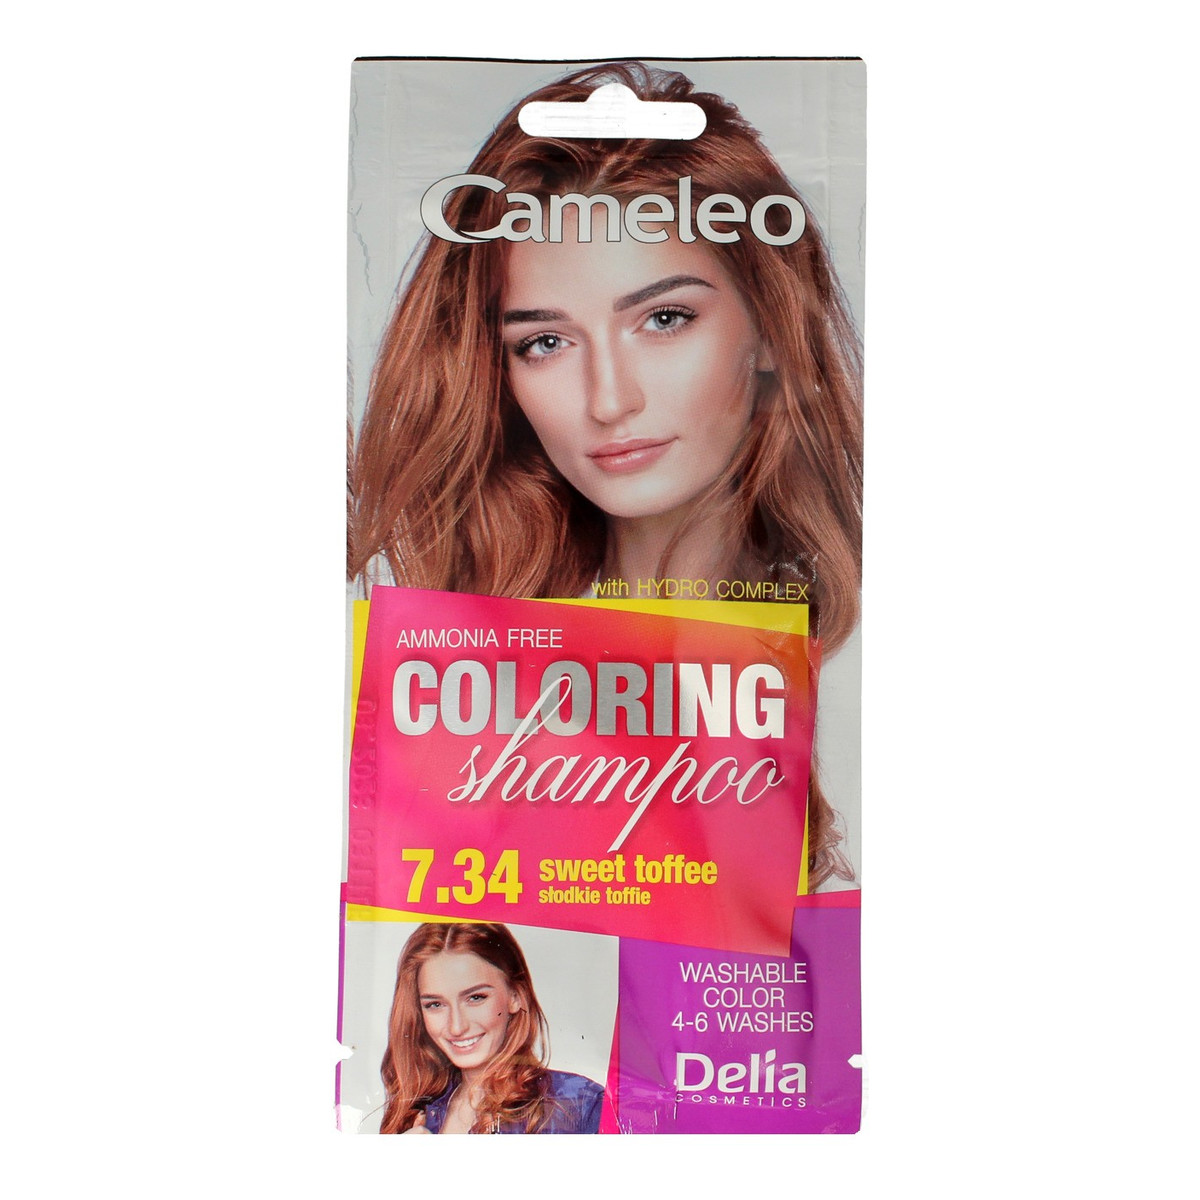 cameleo coloring szampon wizaz